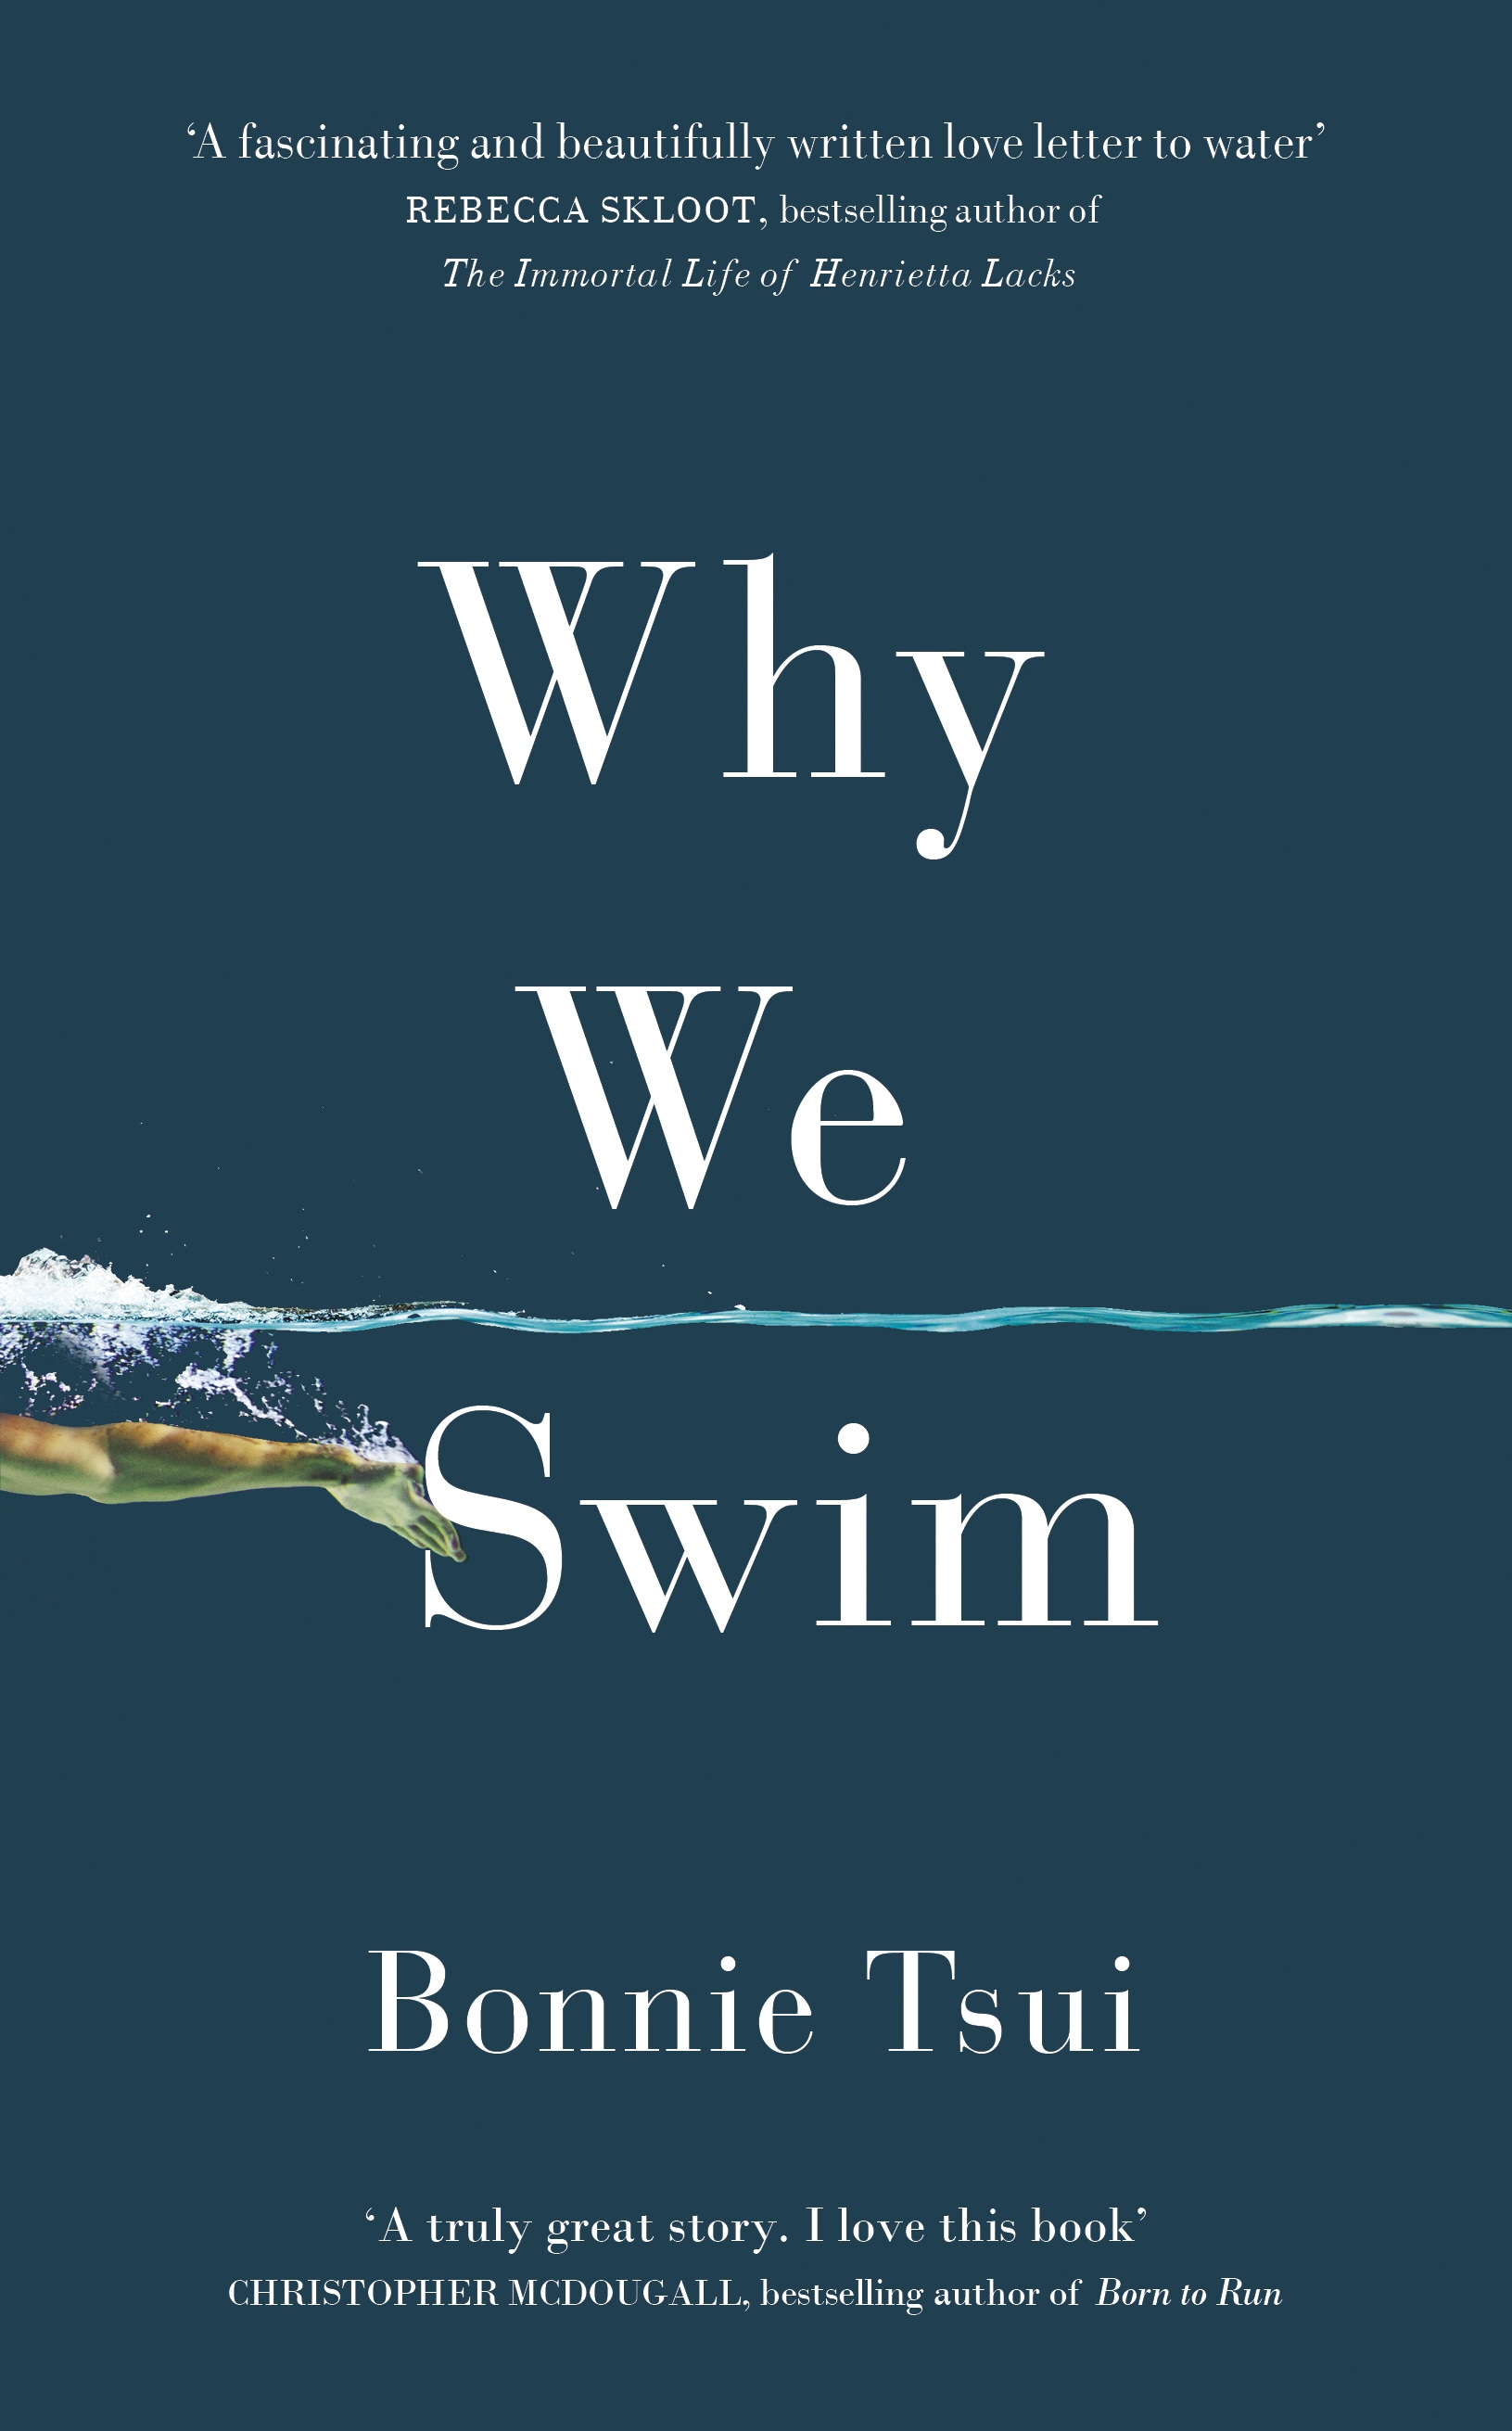 Book “Why We Swim” by Bonnie Tsui — August 6, 2020